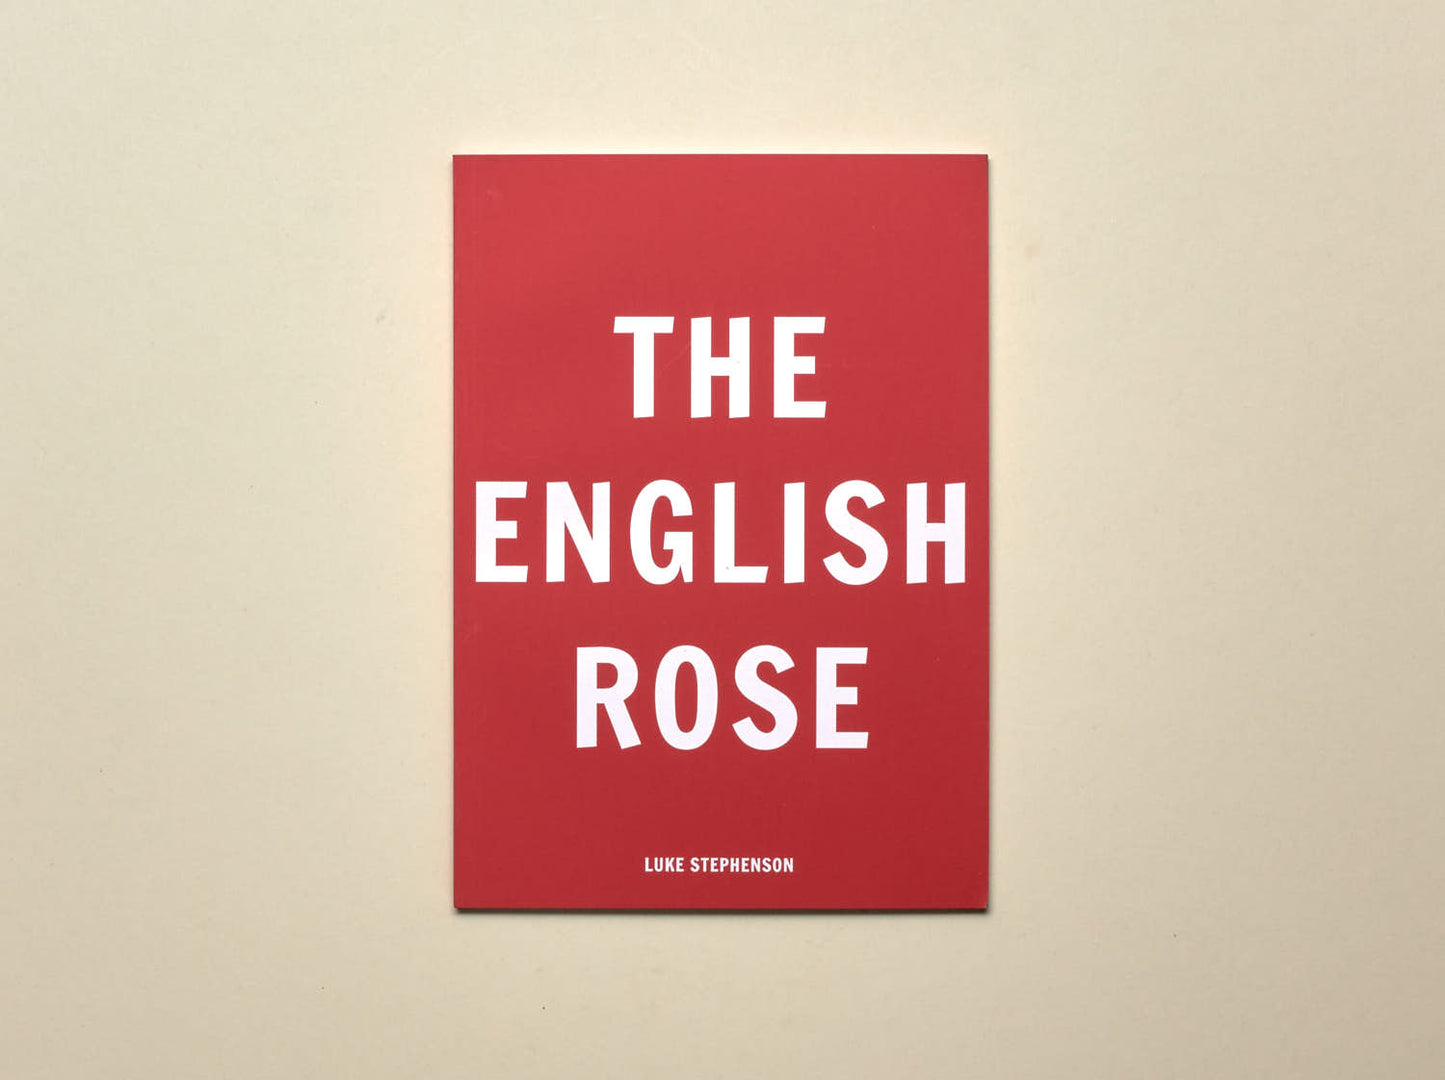 Luke Stephenson, The English Rose